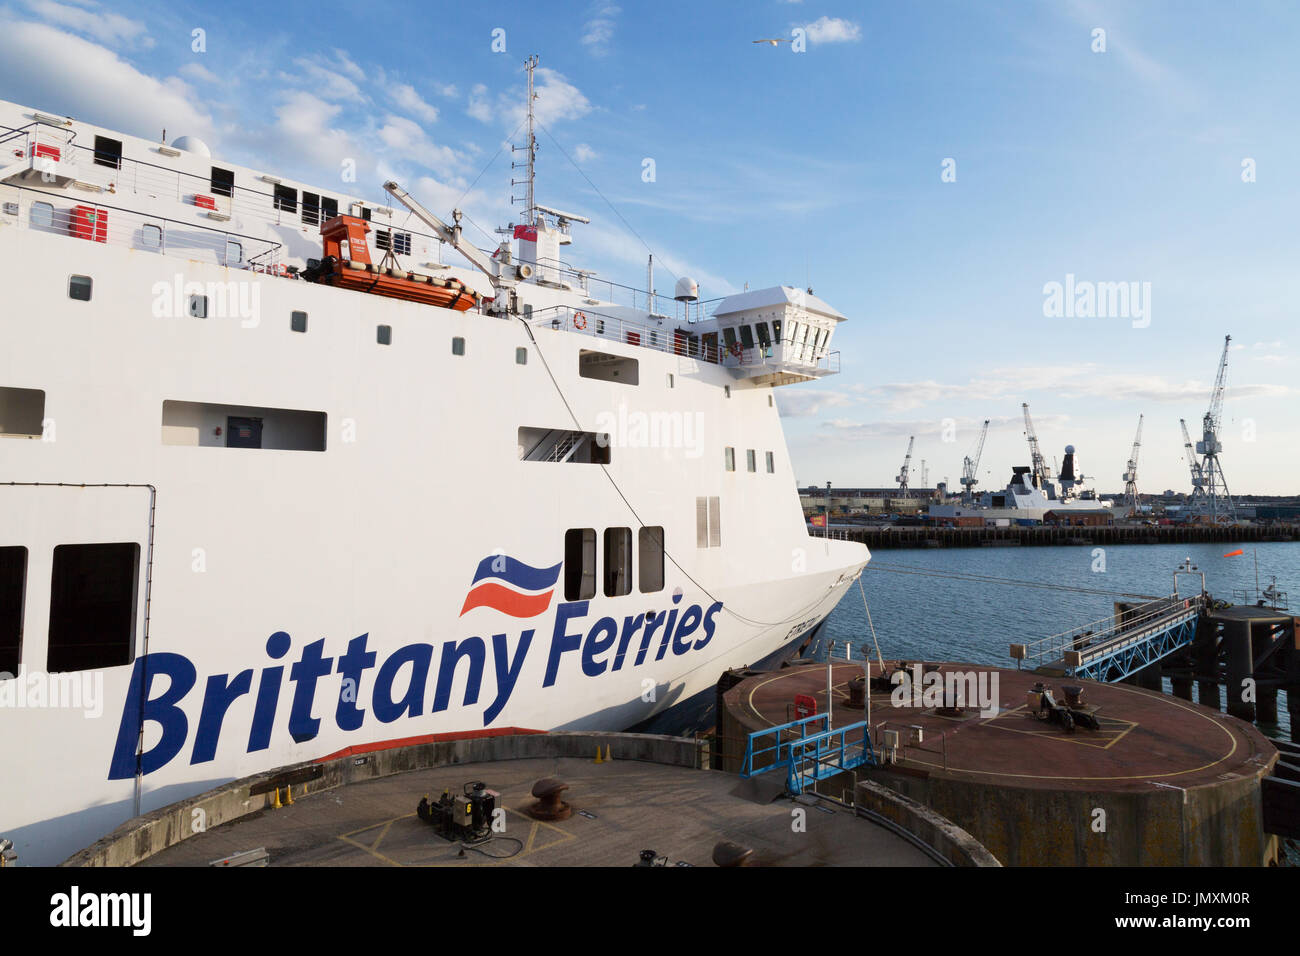 Brittany Ferries - Brittany Ferry dans un dock, le port de Portsmouth, Portsmouth England UK Banque D'Images